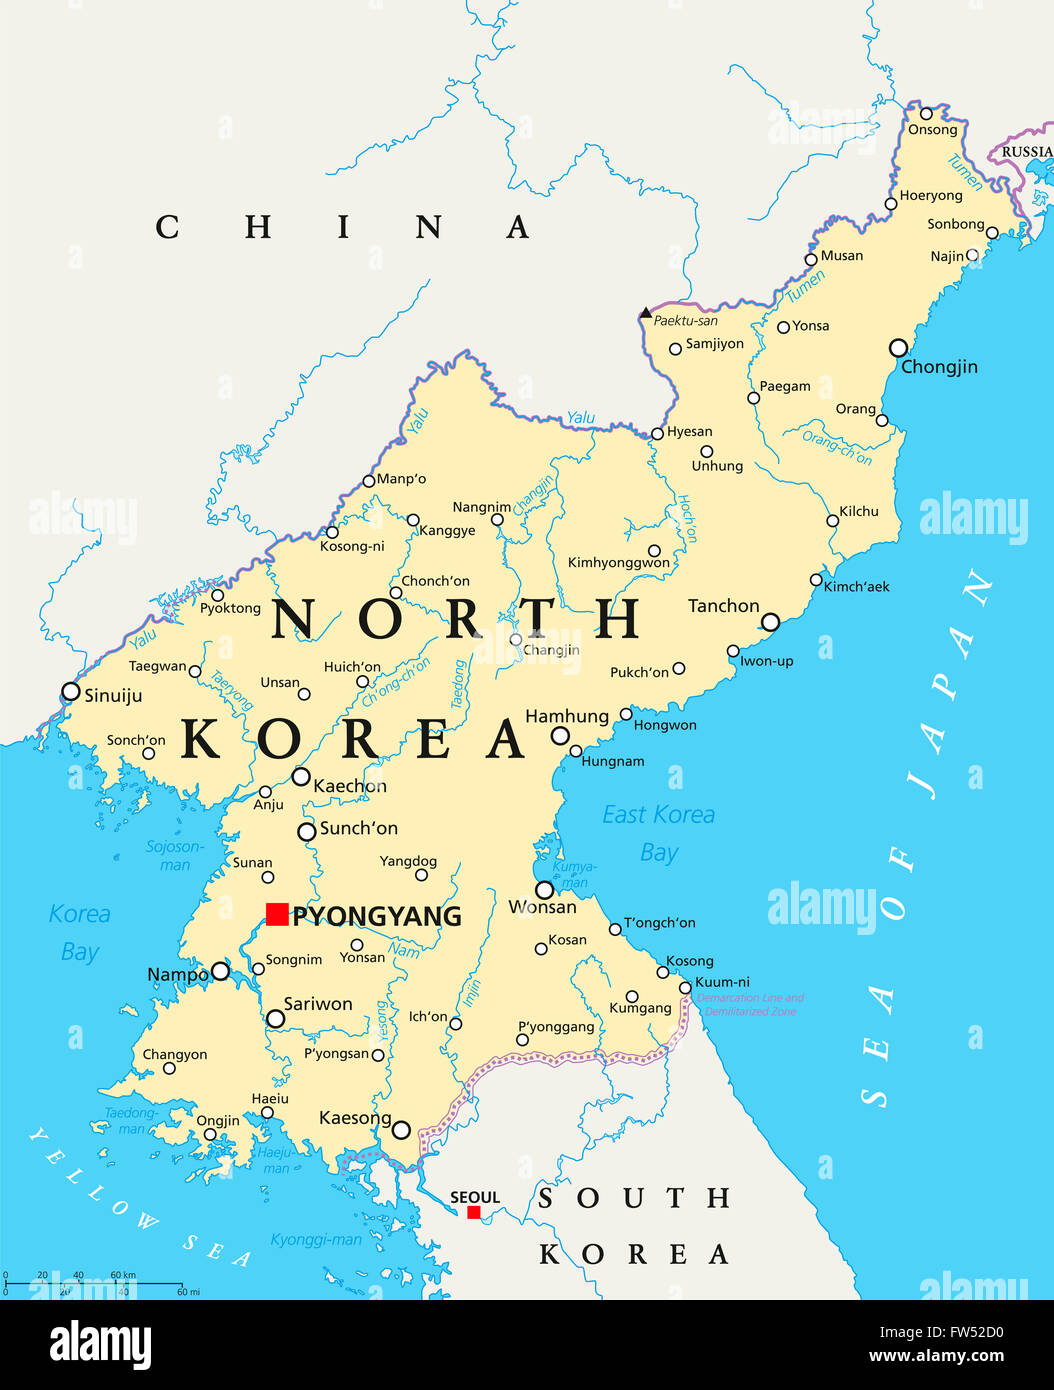 North Korea Political Map With Capital Pyongyang National Borders